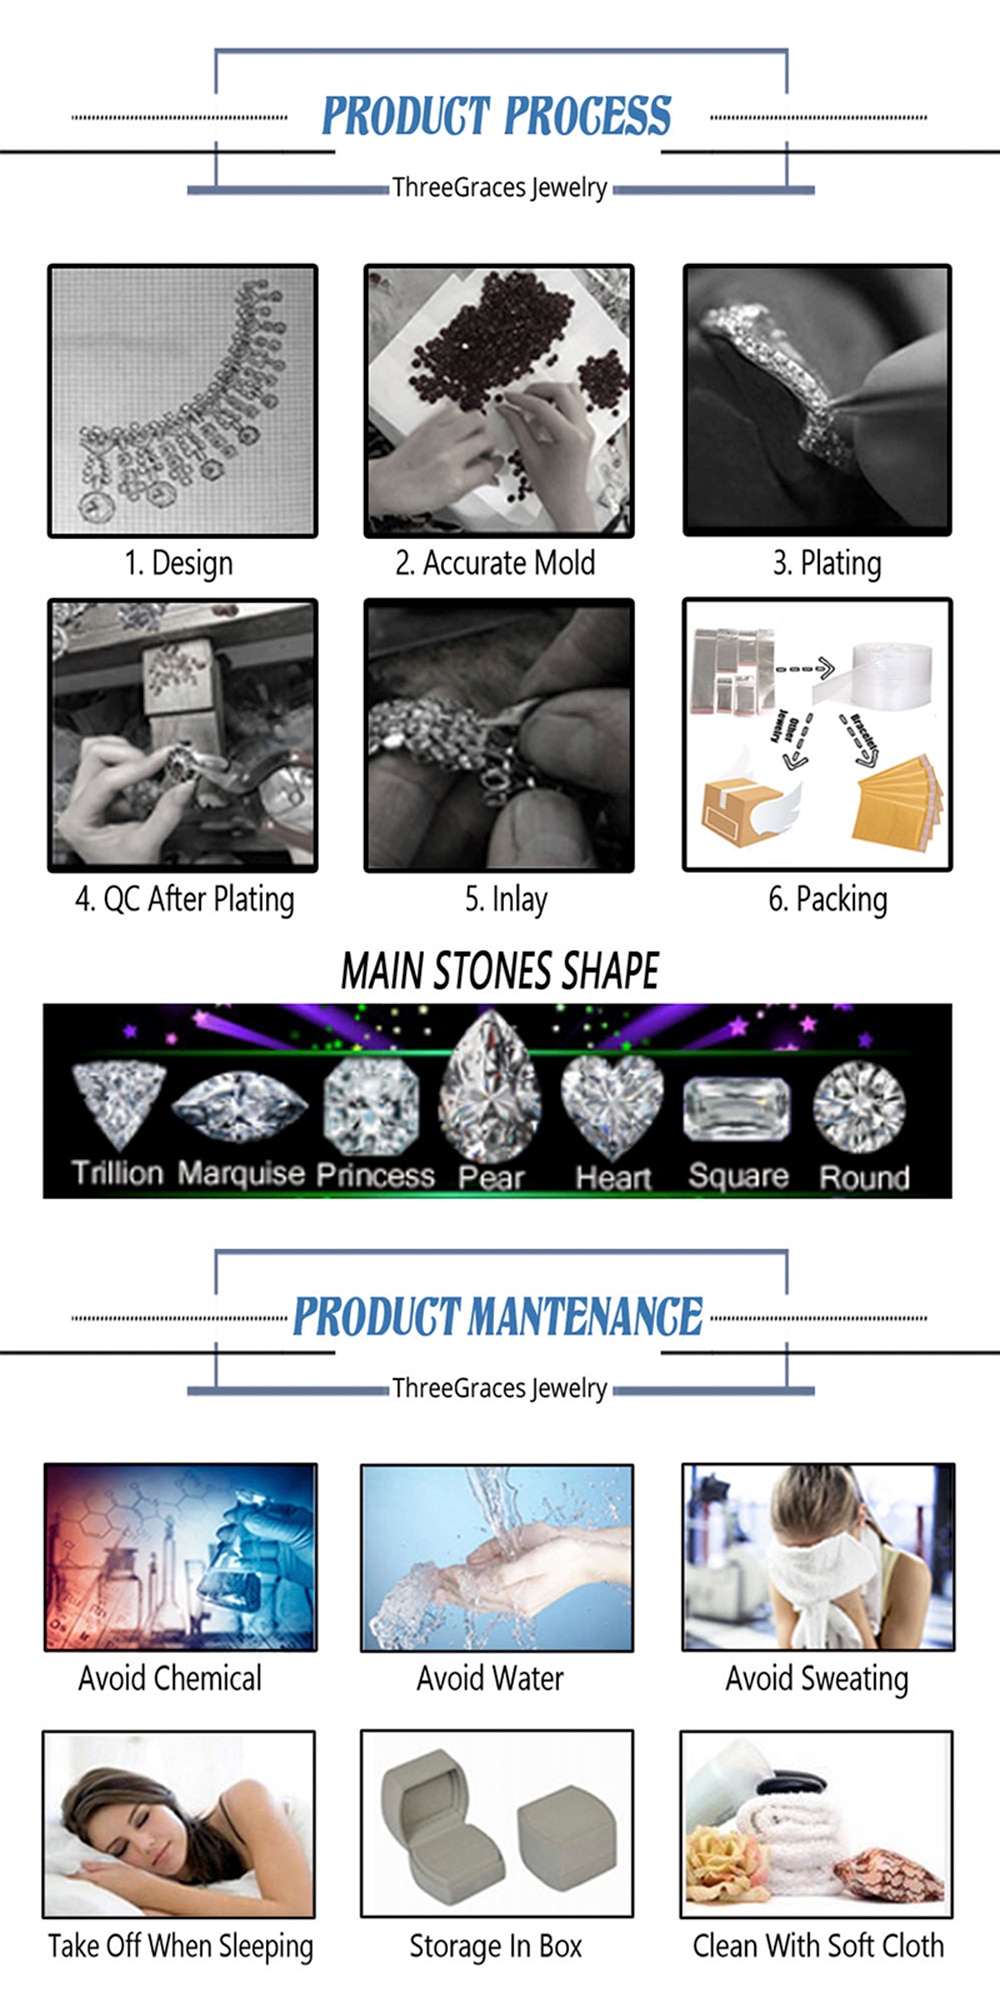 ThreeGraces-2pcs-Sparkling-Cubic-Zirconia-Silver-Color-Luxury-Bridal-Wedding-Jewelry-Set-for-Women-P-1005004868944493-14